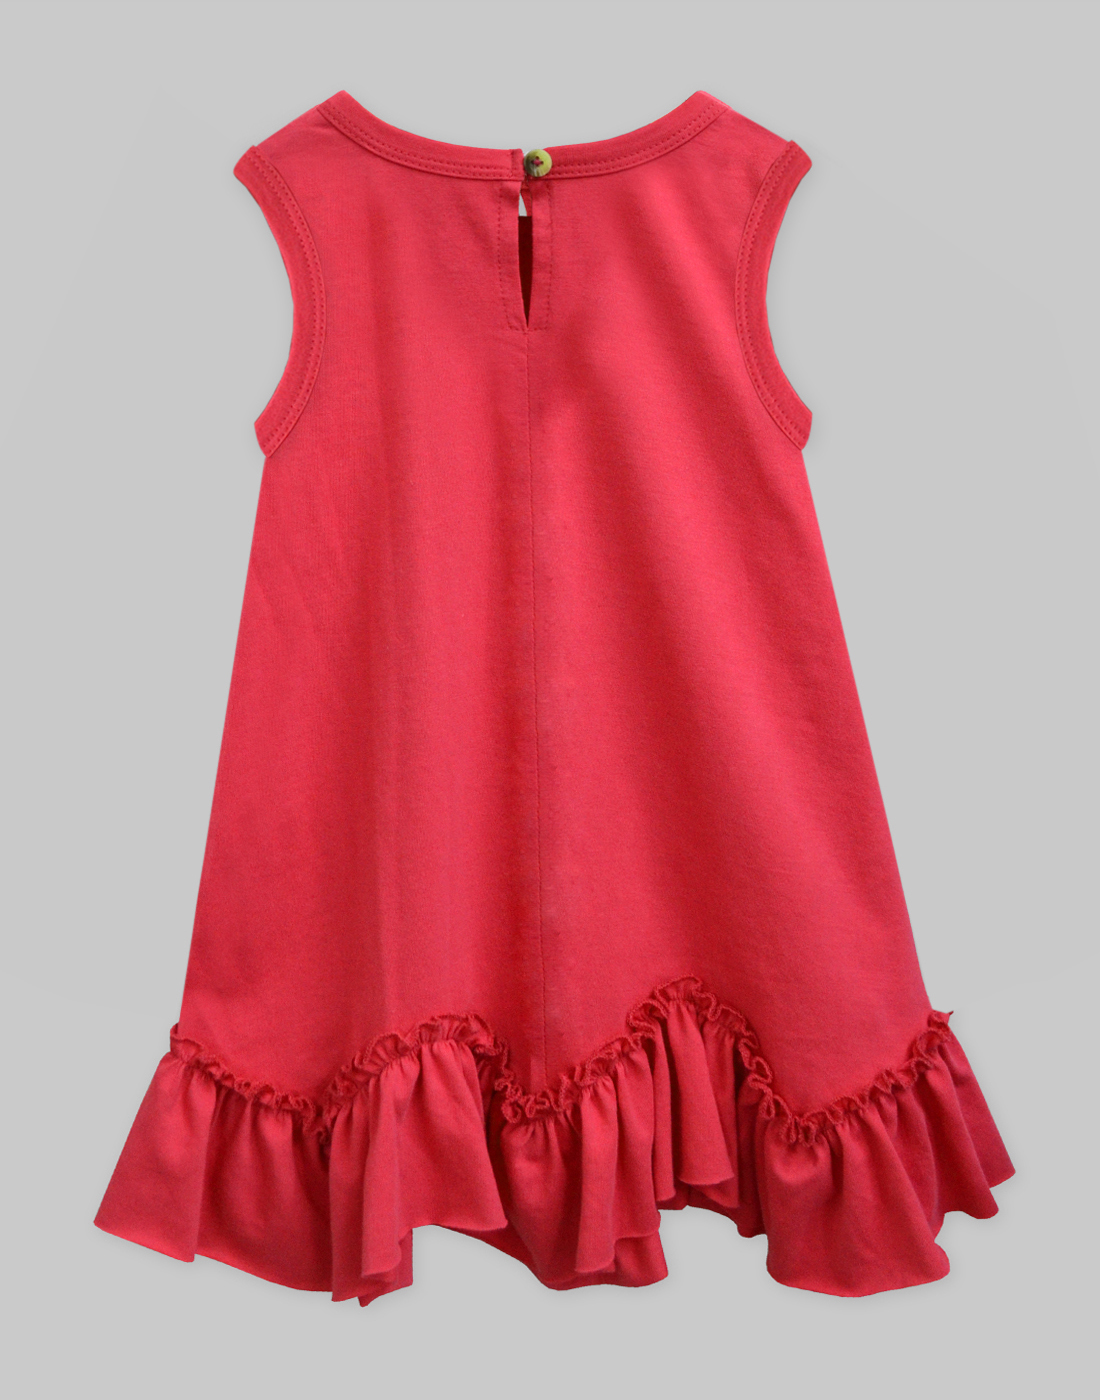 Red Cordelia Dress - A.T.U.N.